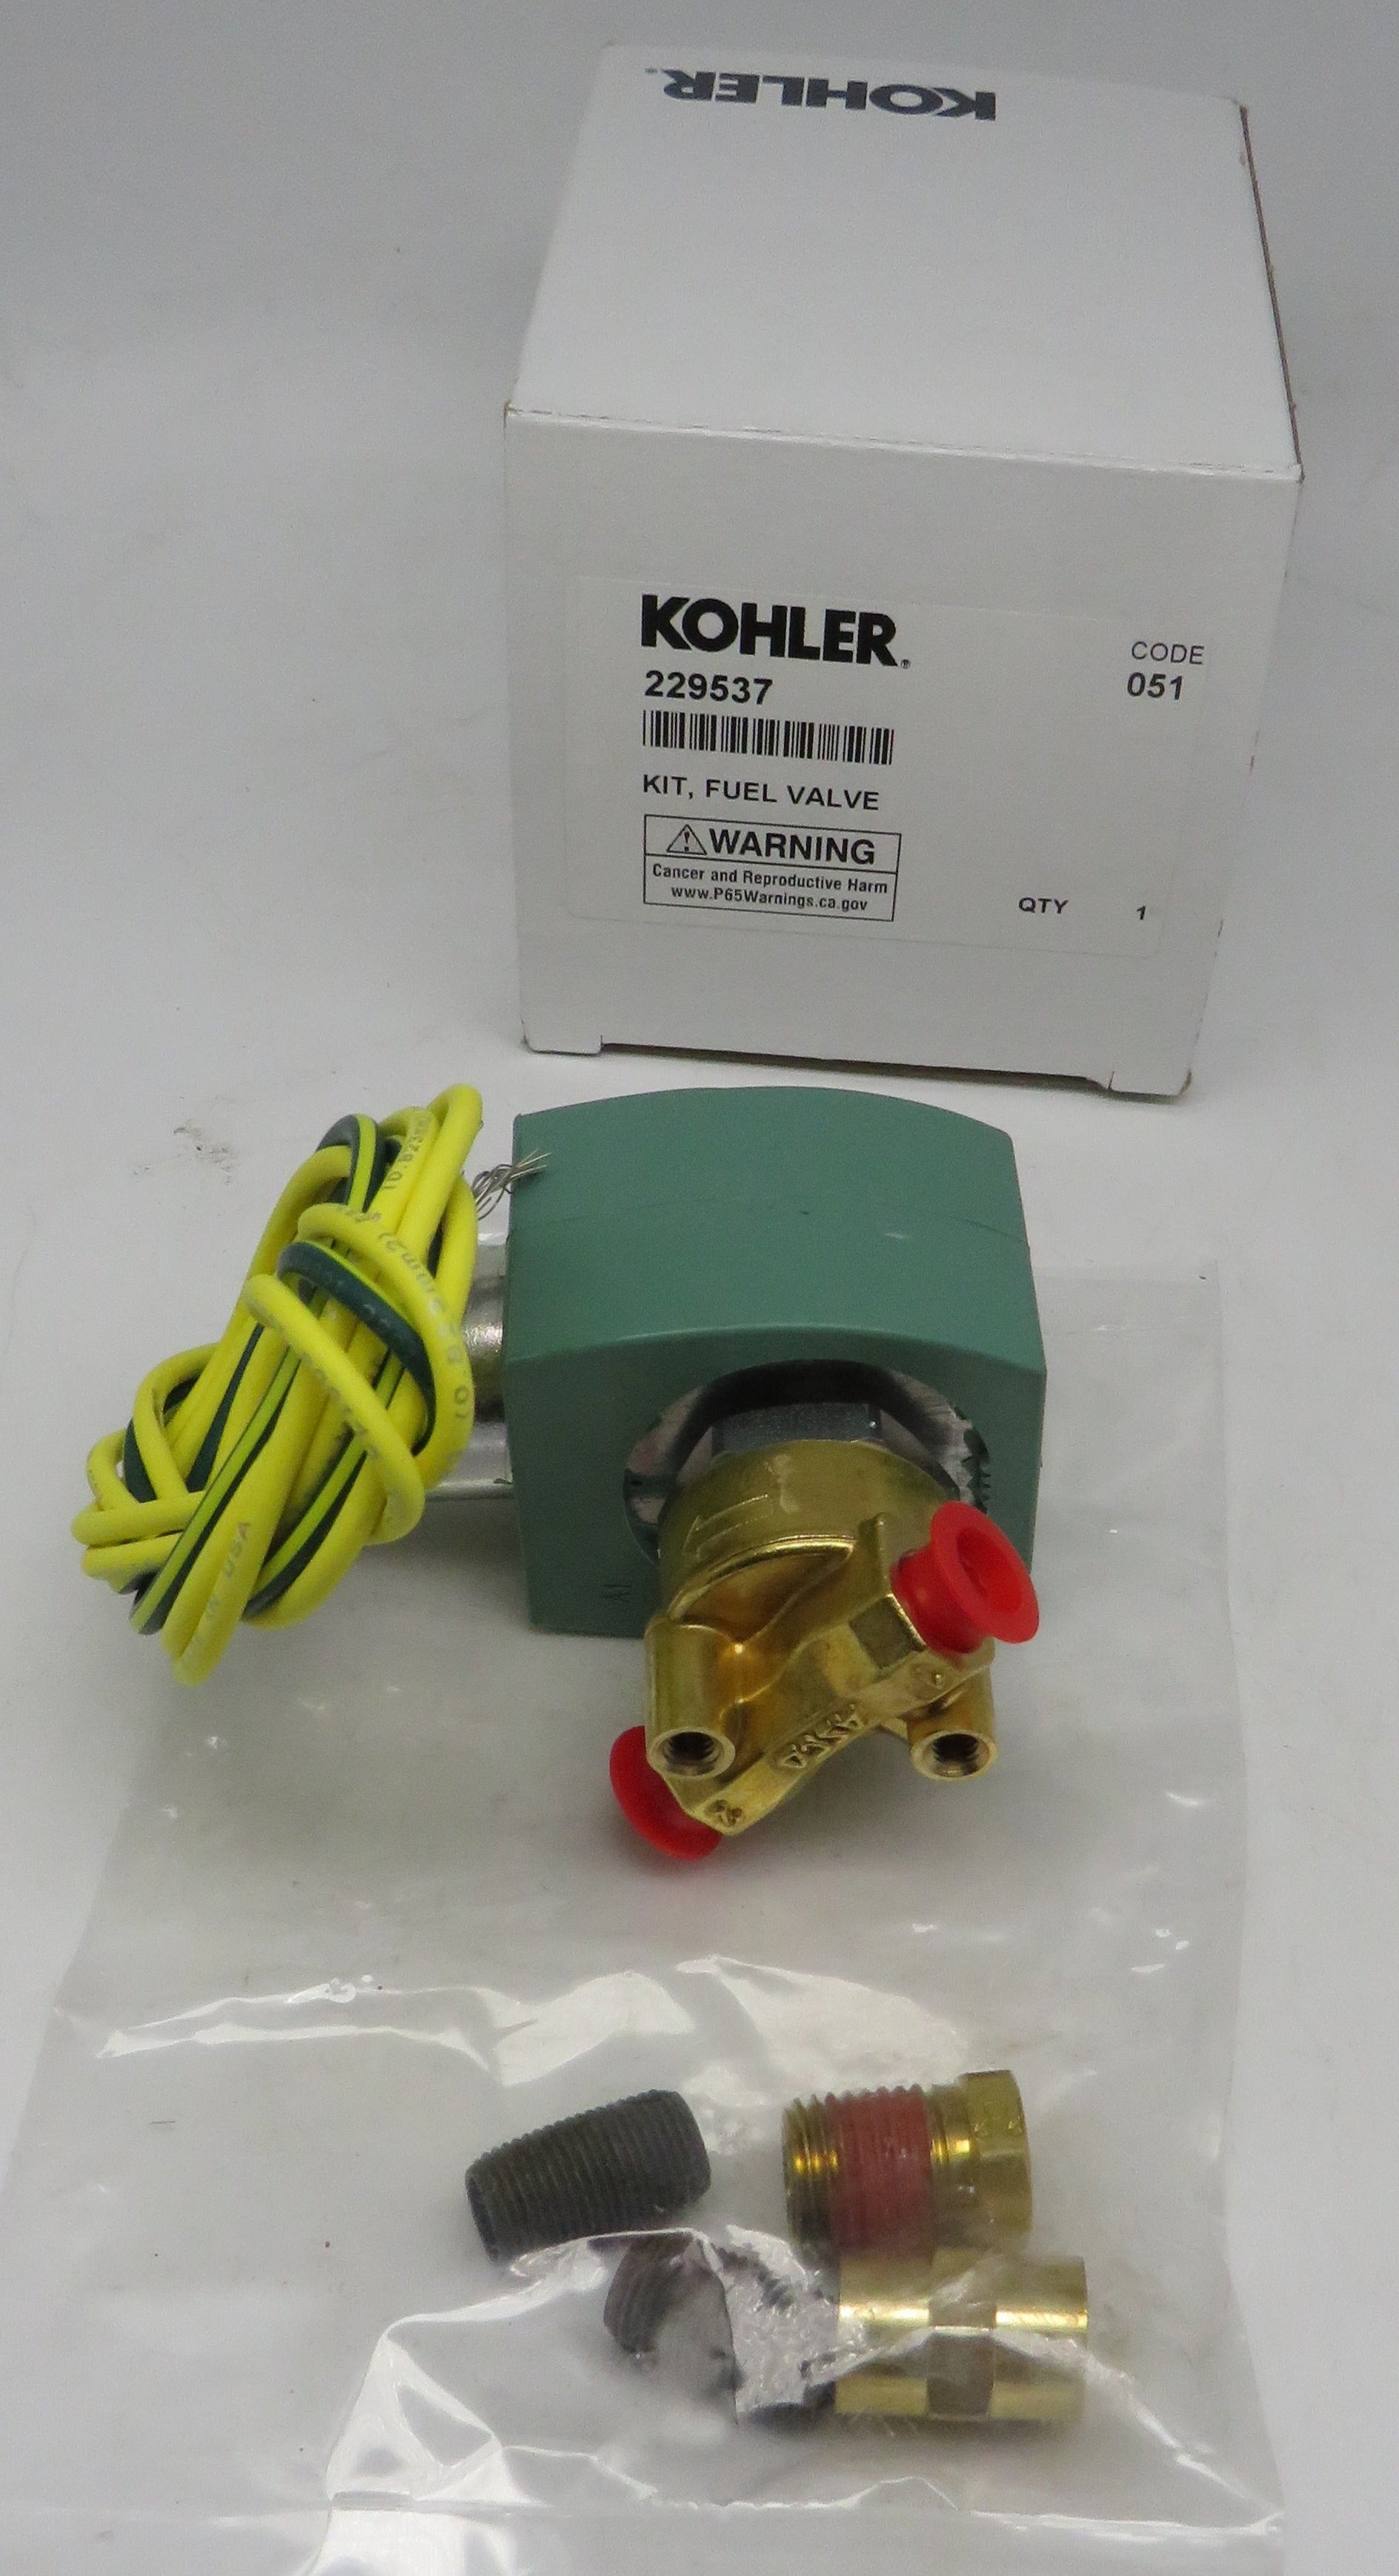 229537 Kohler Fuel Valve Solenoid Replaces 47 462 02 For 7.5 Generator mechanical fuel pump A-241196, 50 393 06, 50 393 08